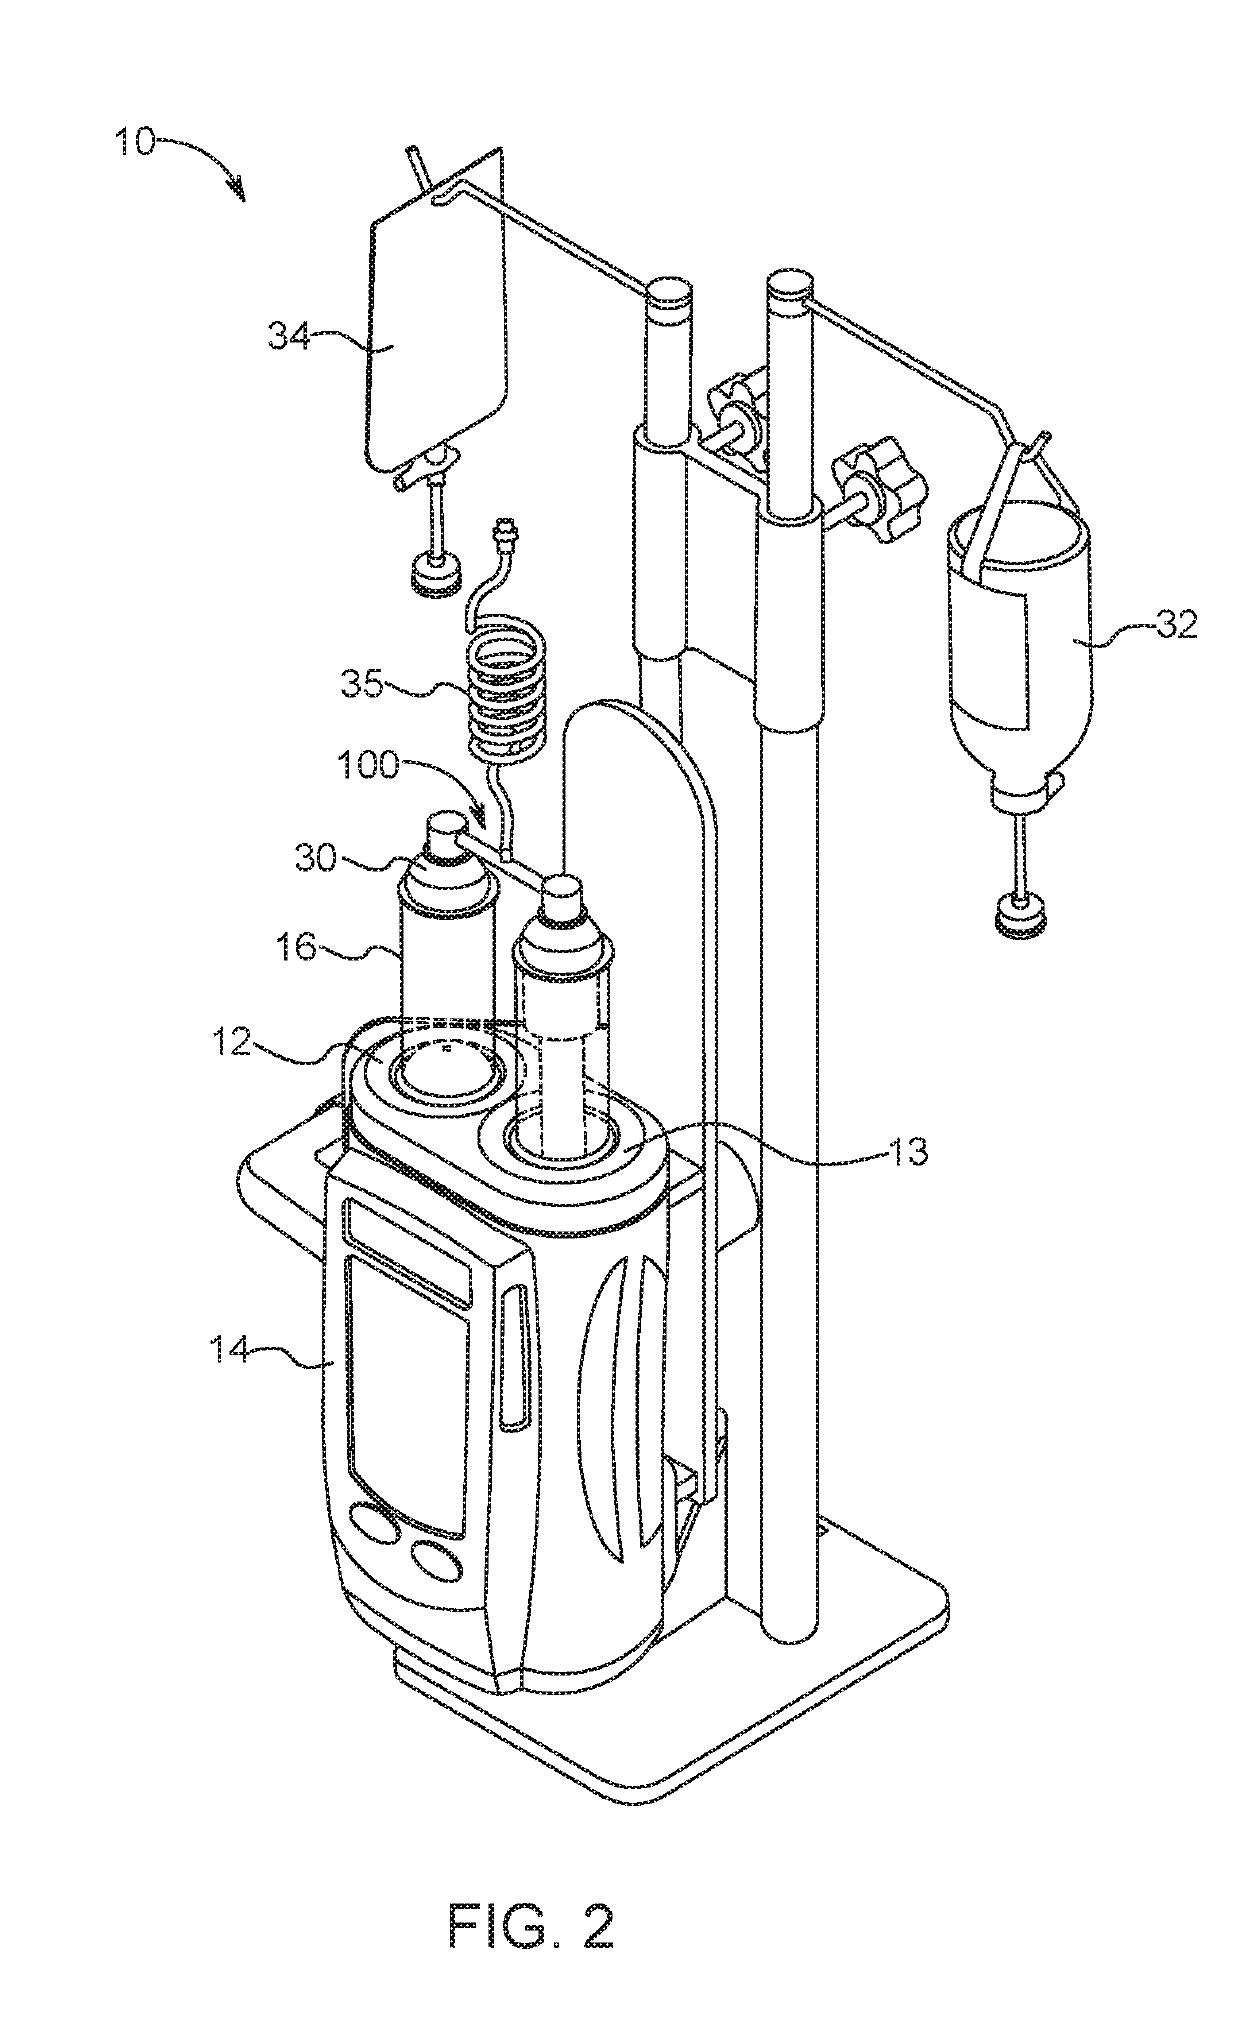 Fluid control valve and manifold